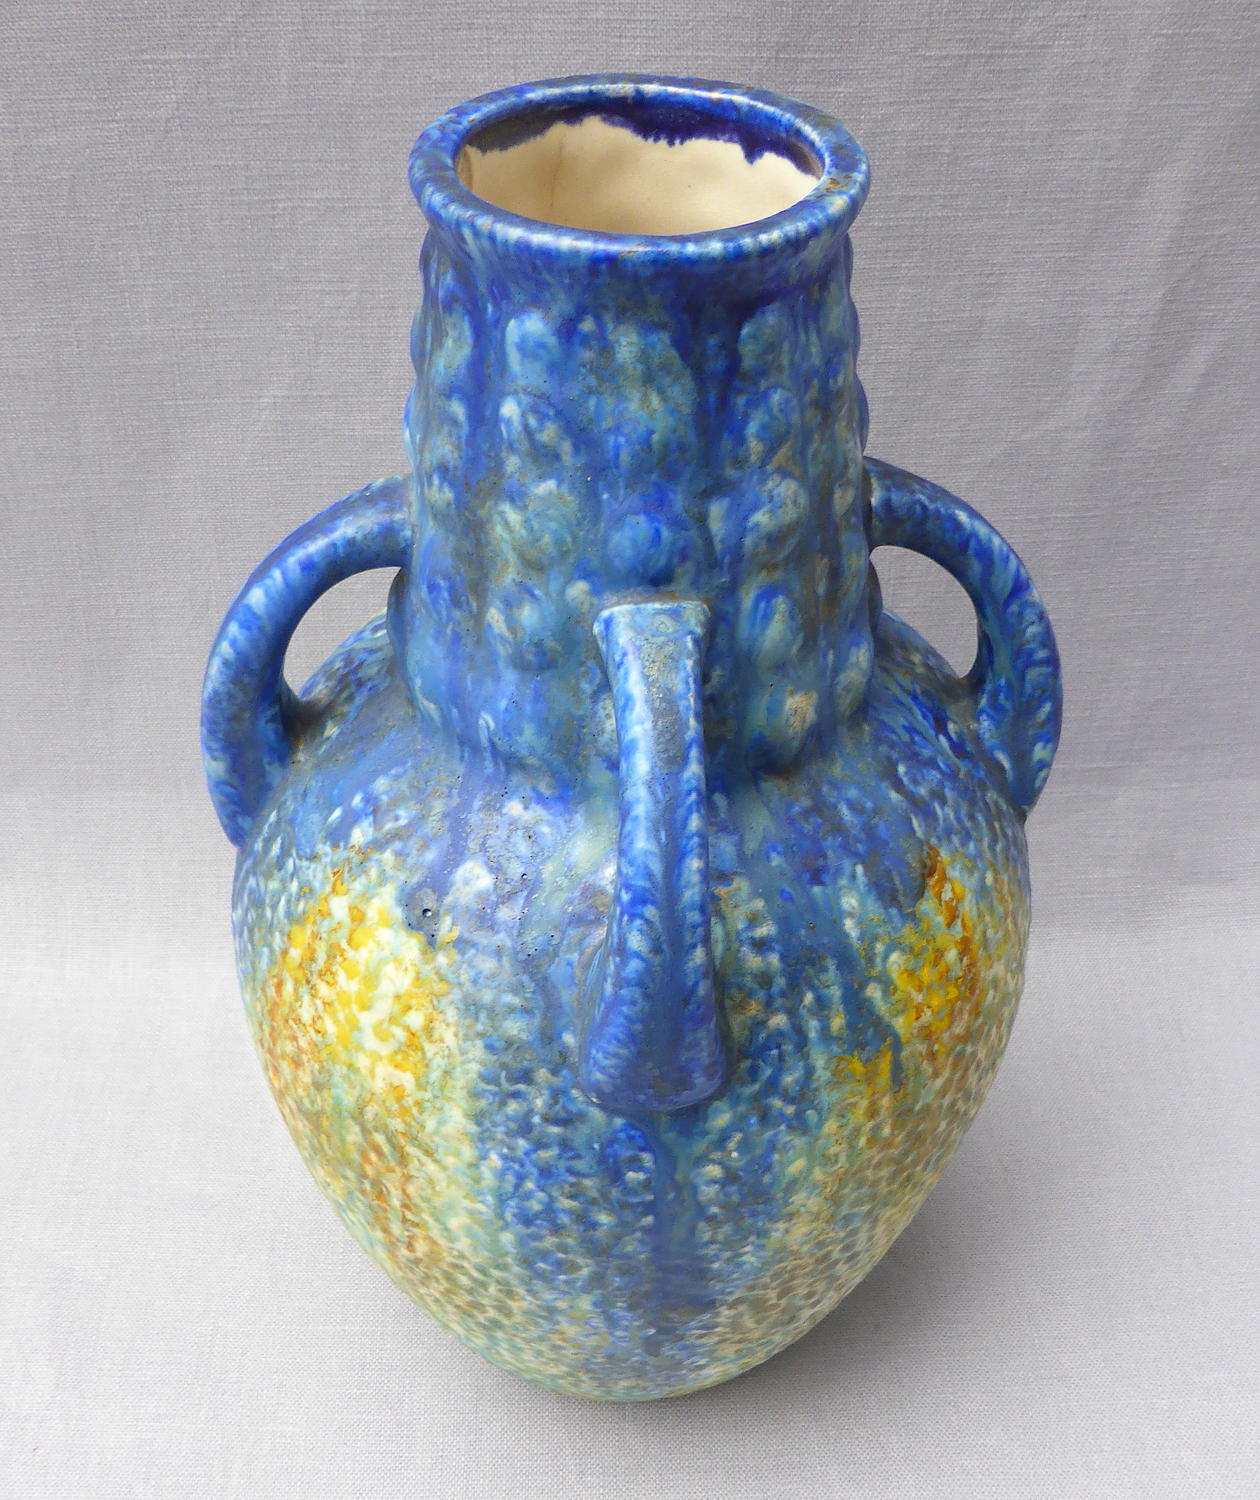 Early 20th century Bretby Art Pottery Nerton Ware vase